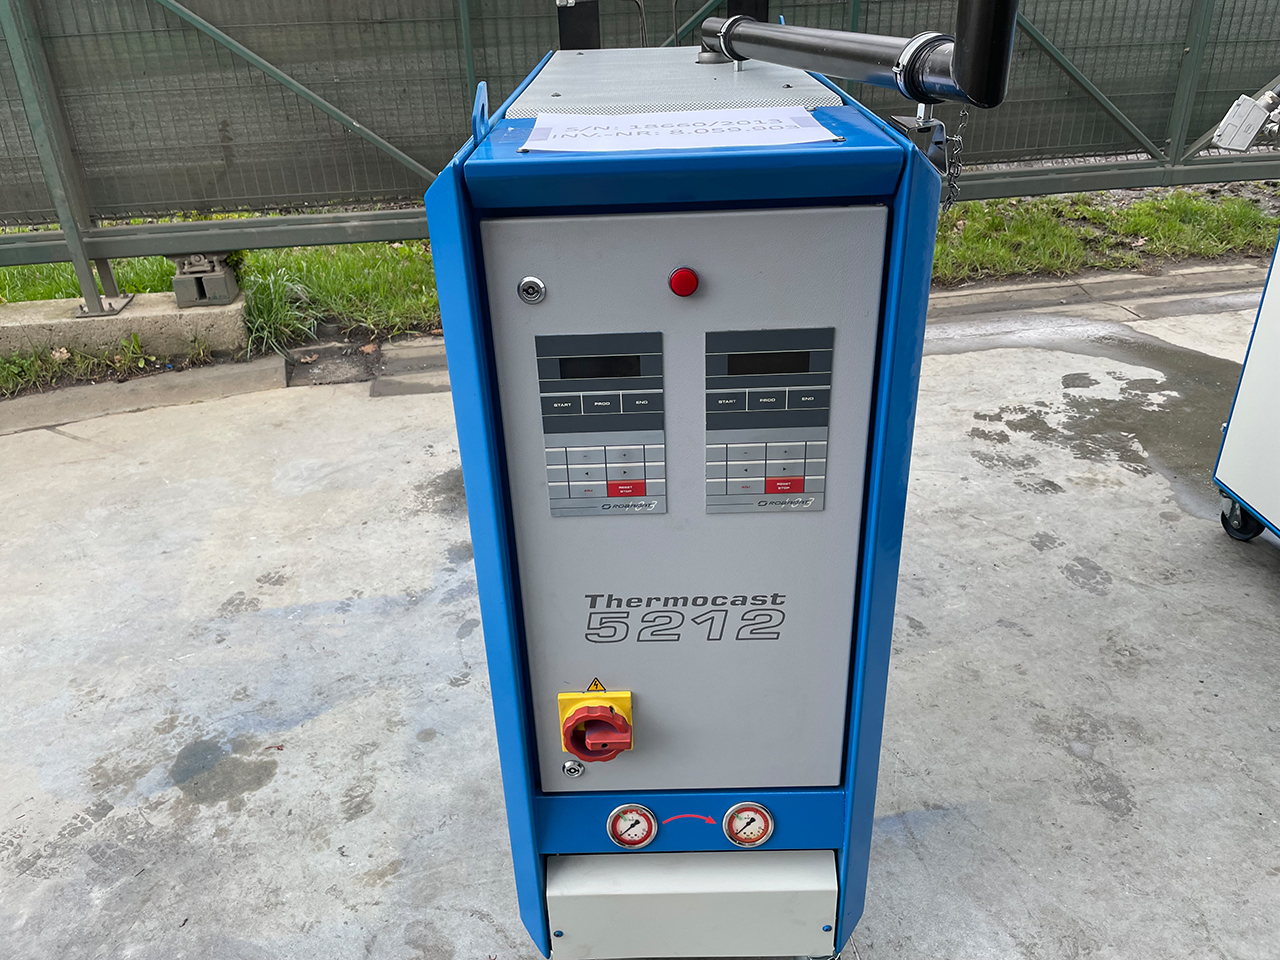 Robamat Thermocast 5212 oil temperature control unit ZU2217, used